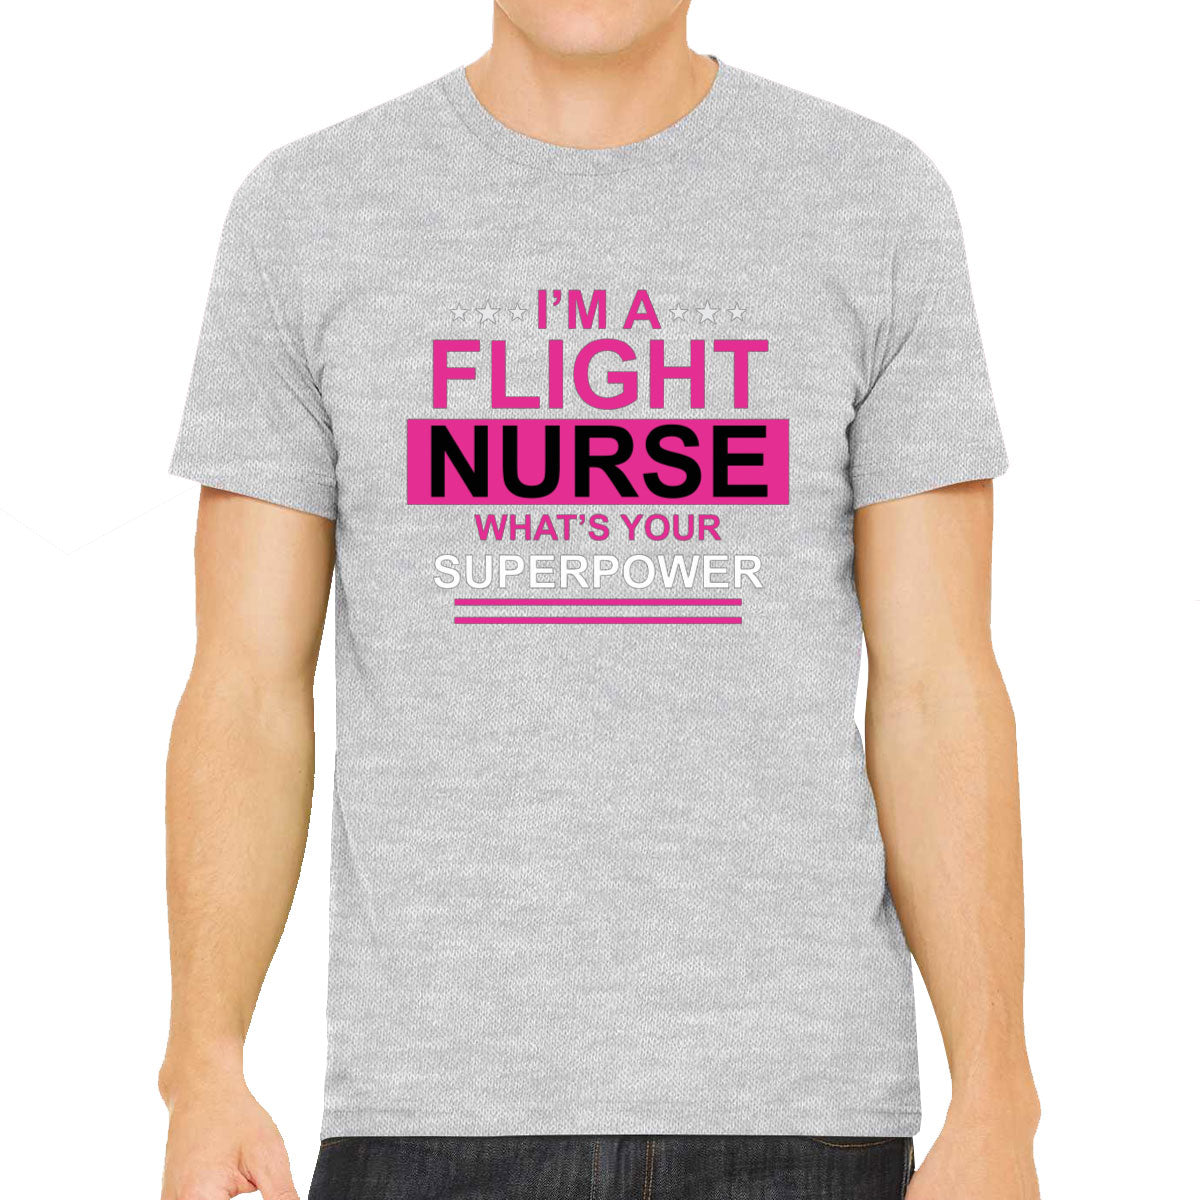 I'm A Flight Nurse What's Your Superpower? Men's T-shirt